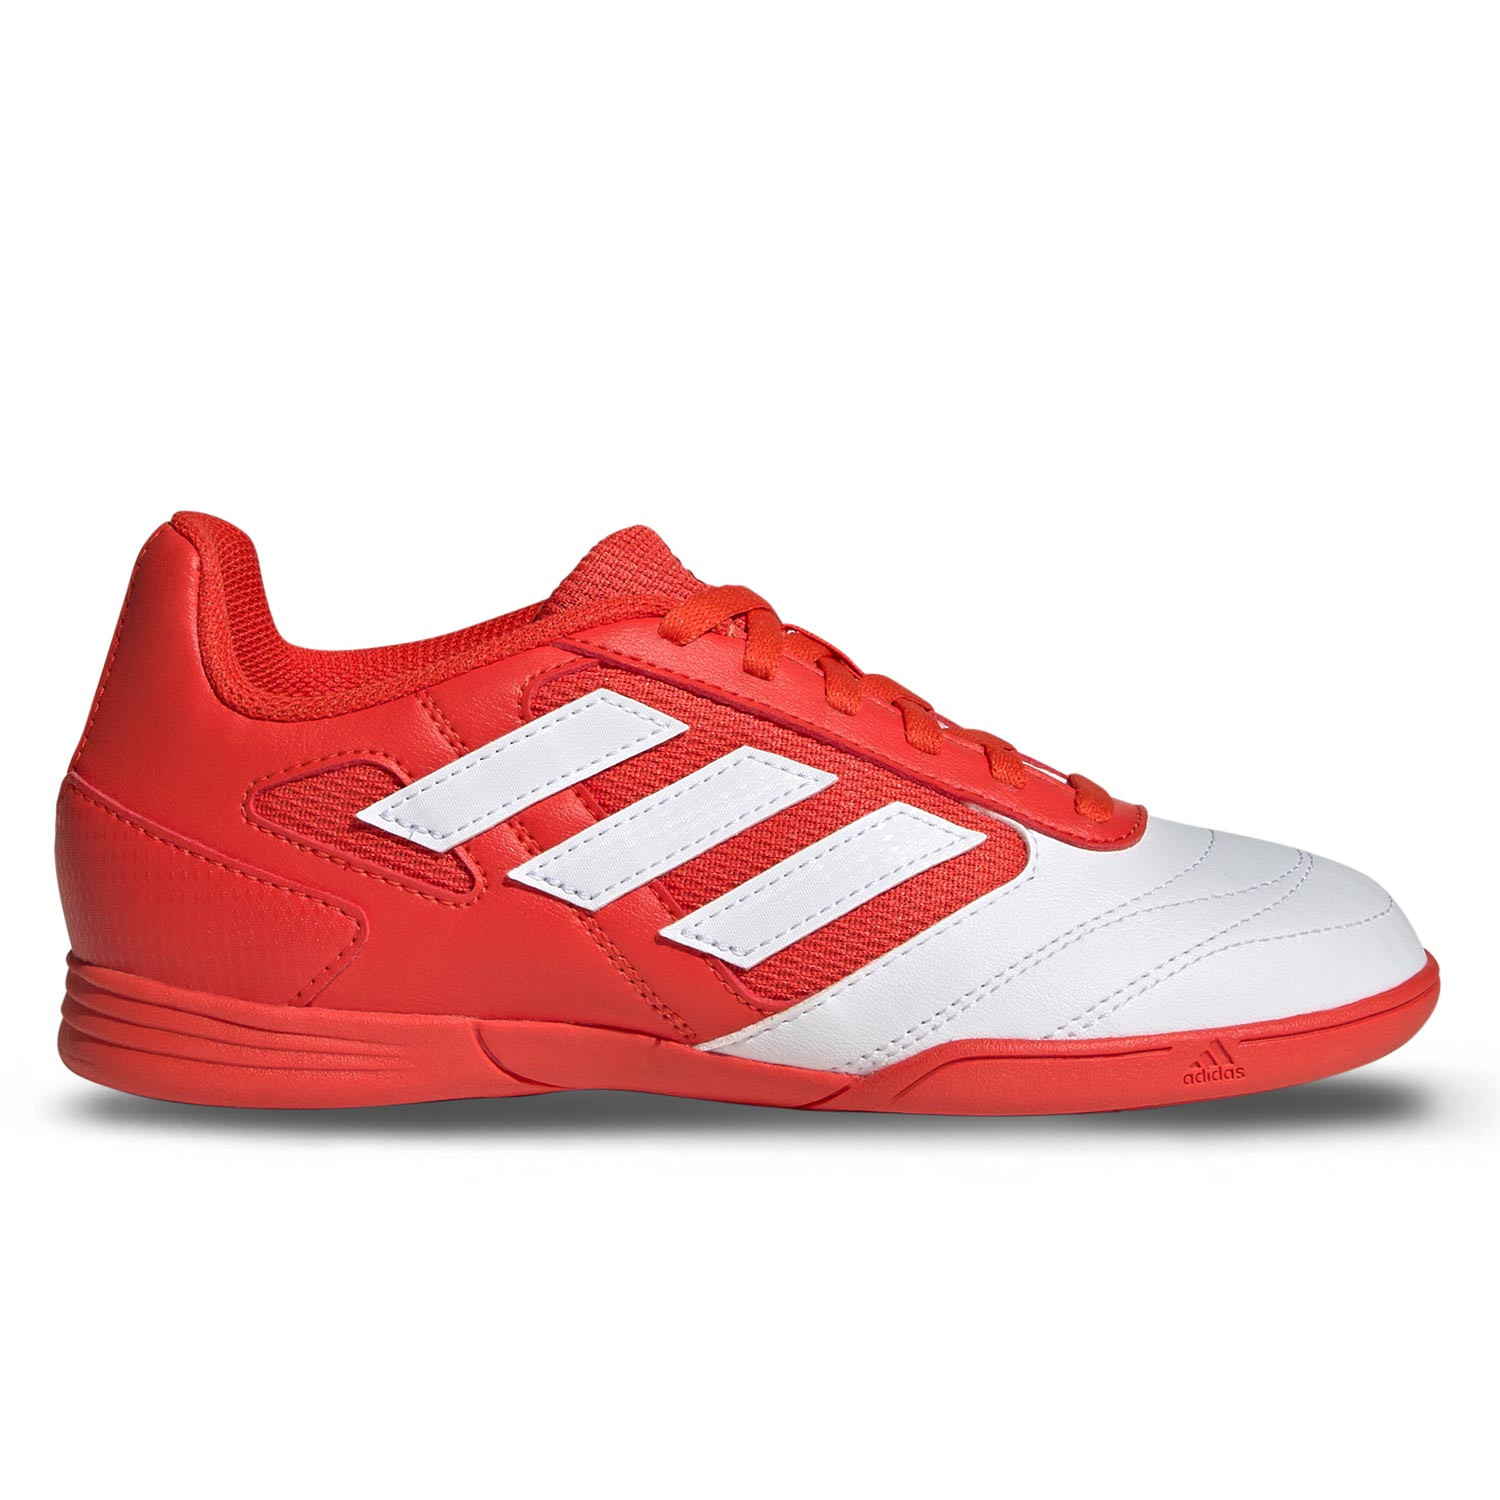 Zapatillas futsal adidas Super Sala 2 J rojas blancas